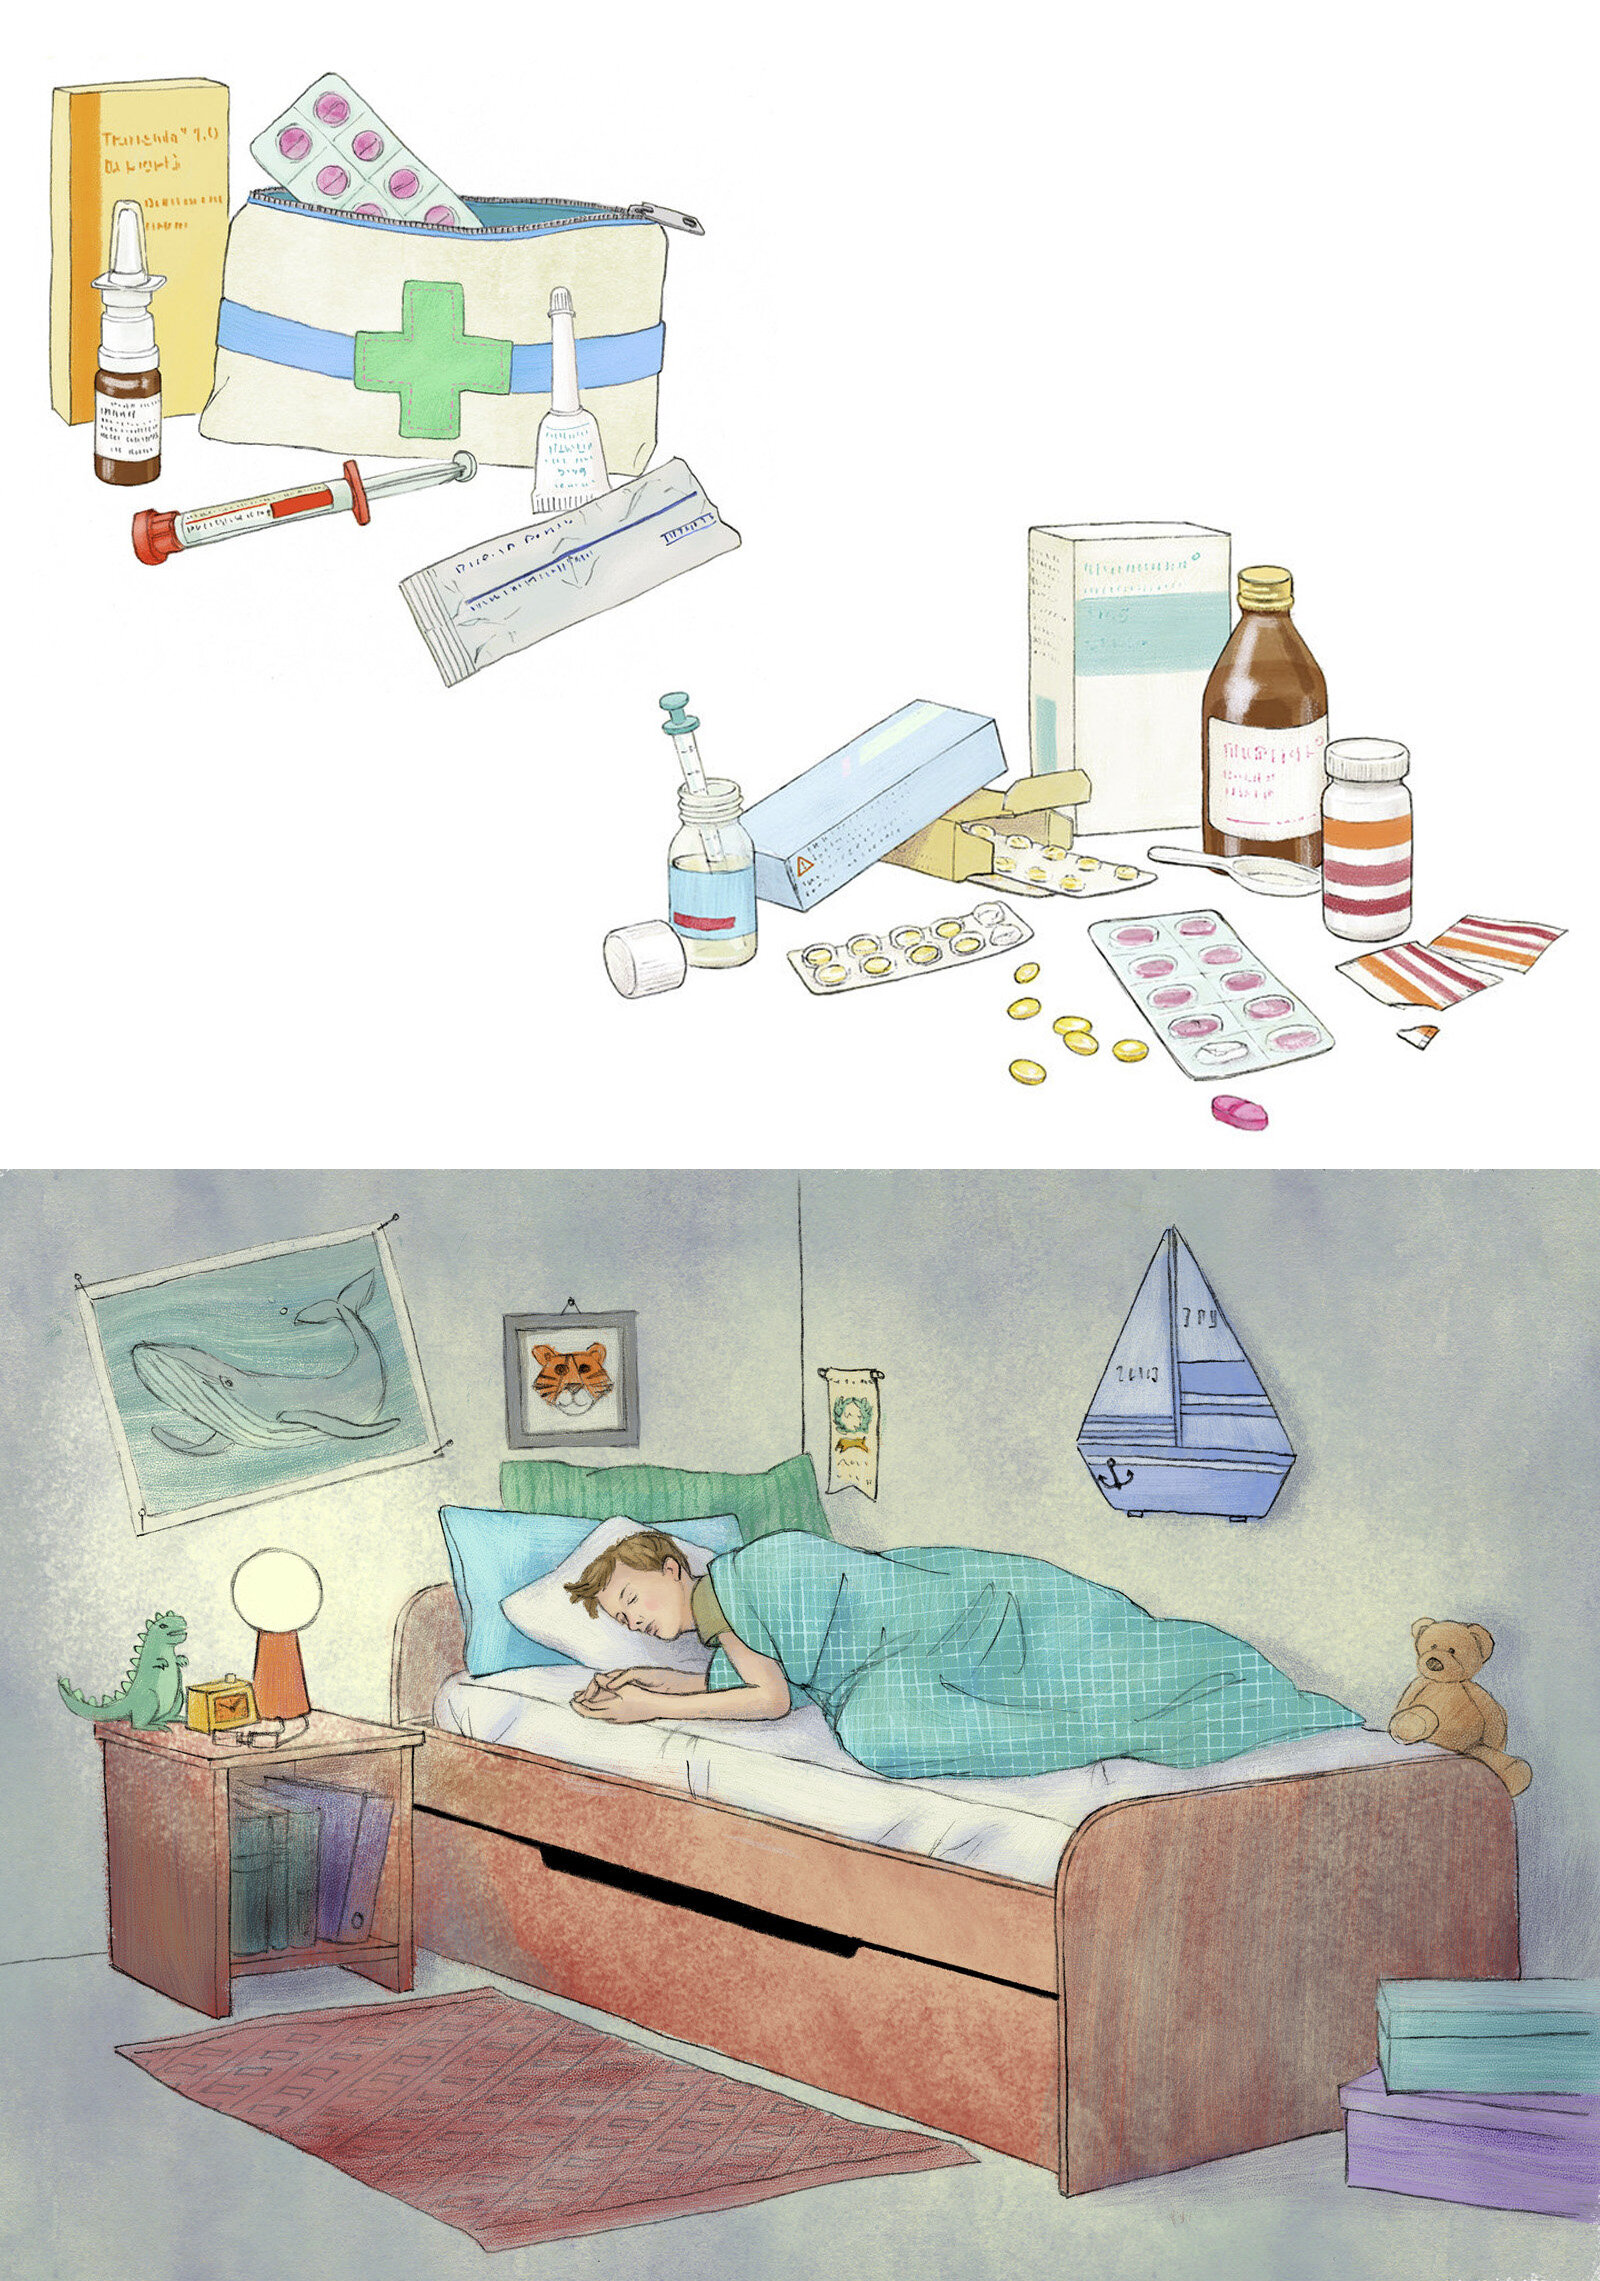 illustra_OliviaAloisi_oculus-illustration-epilepsie_episuisse_medikamente